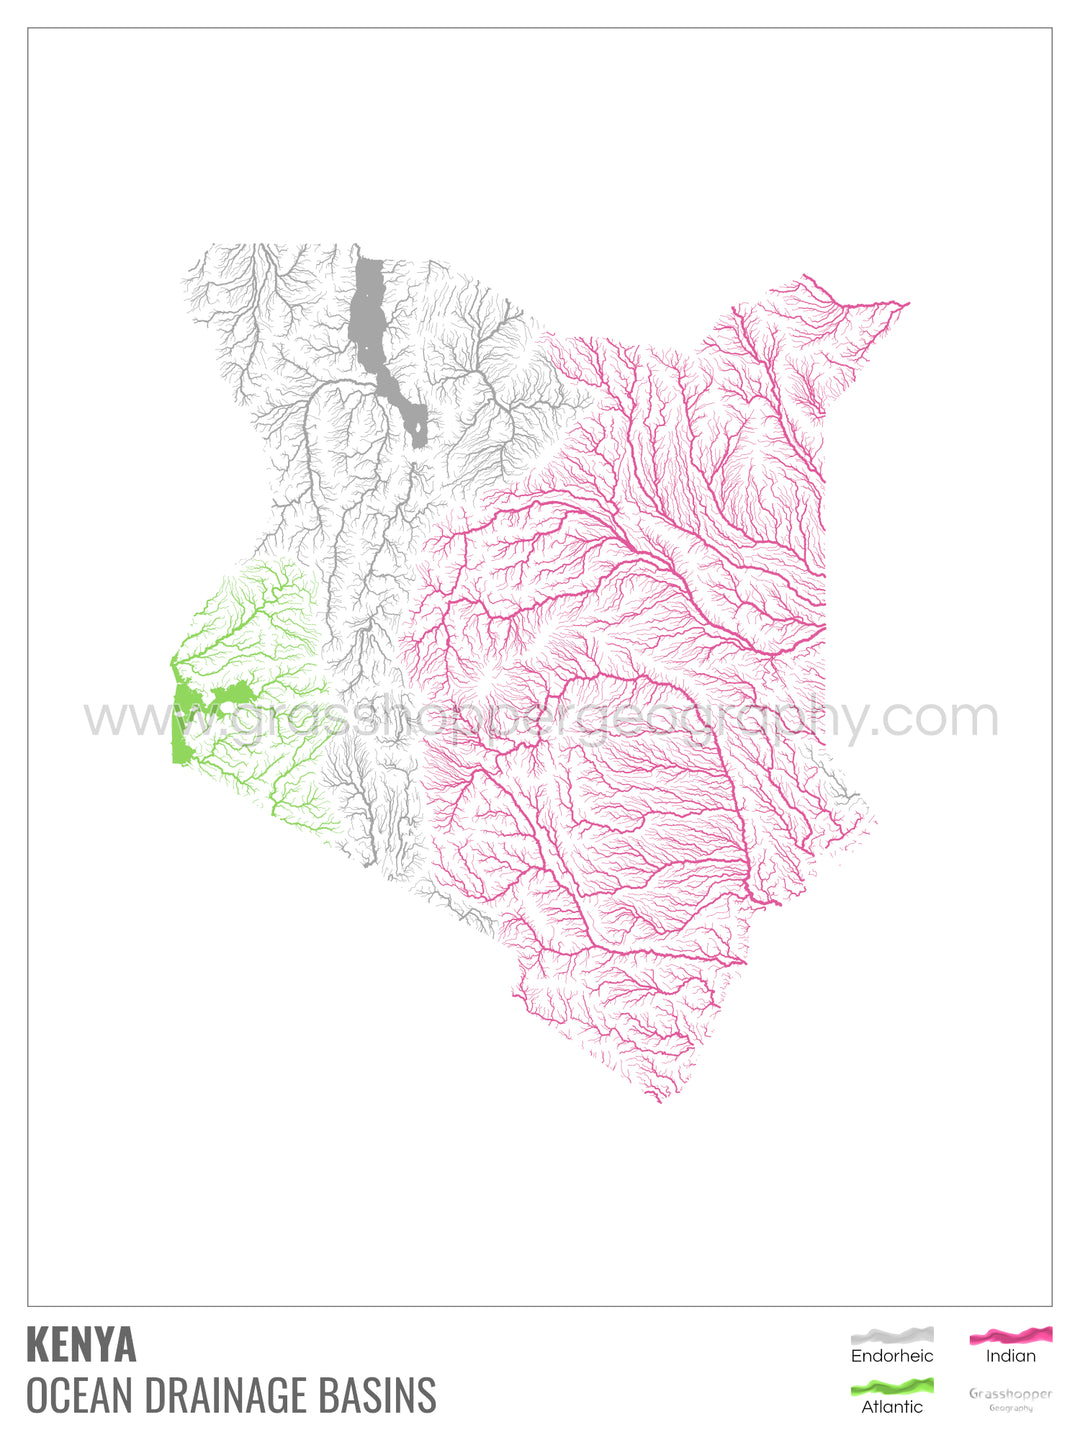 Kenya - Carte du bassin versant océanique, blanche avec légende v1 - Tirage d'art avec cintre